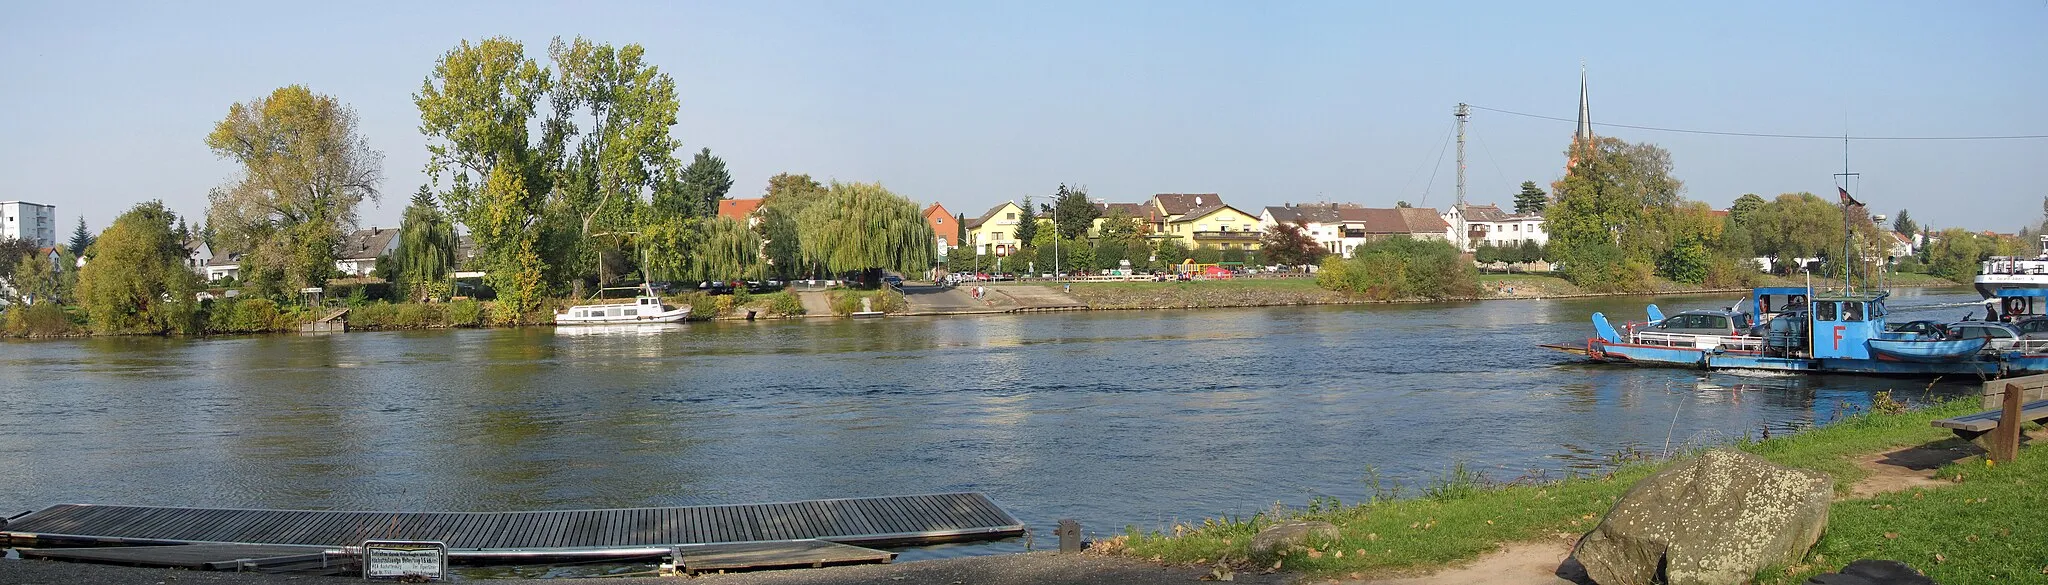 Image of Mühlheim am Main